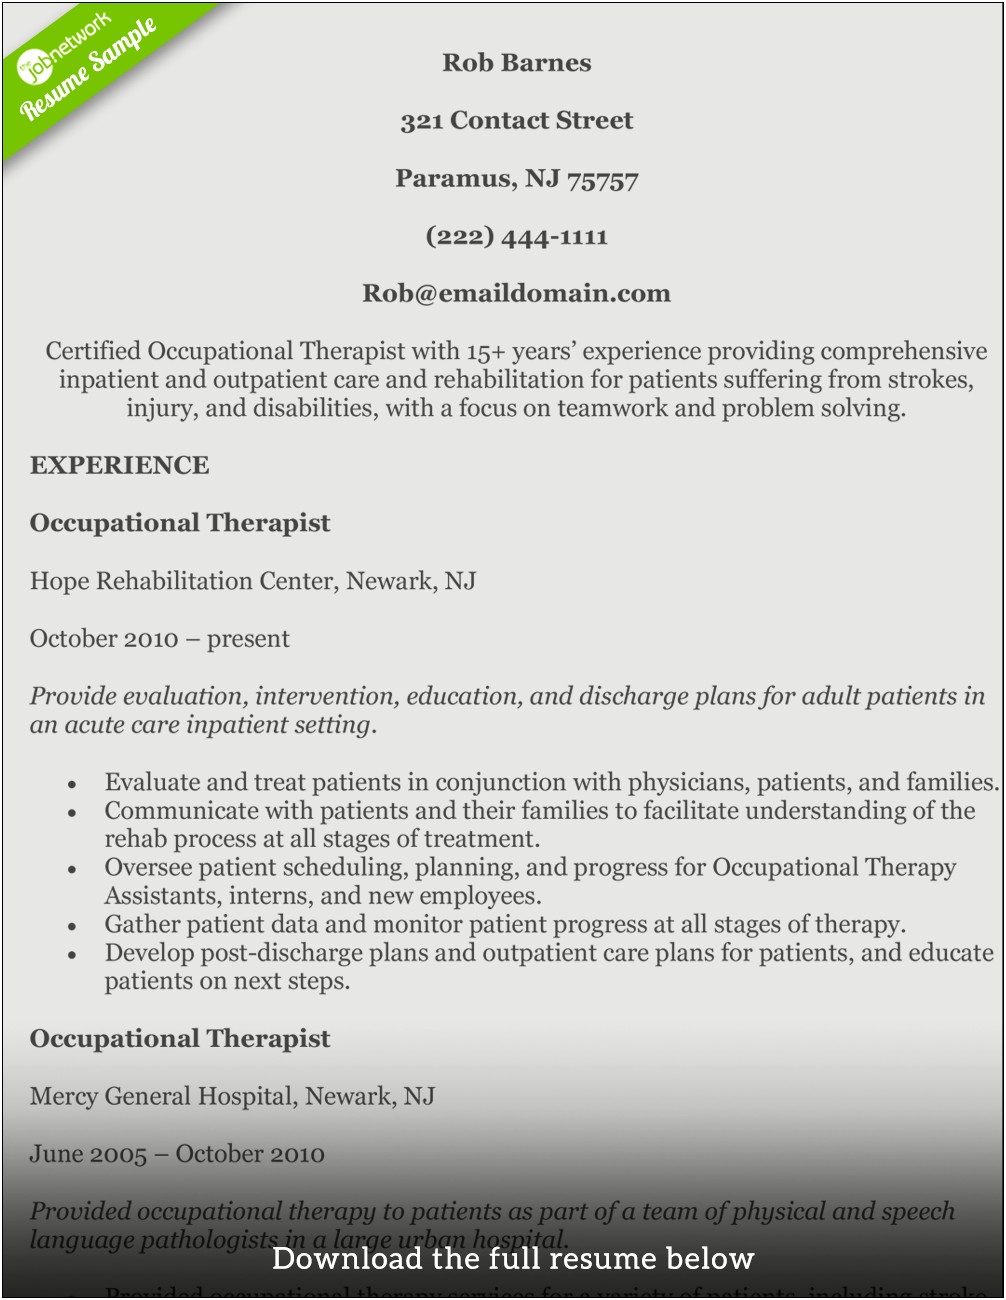 Sample Travel Occupational Therapist Resume